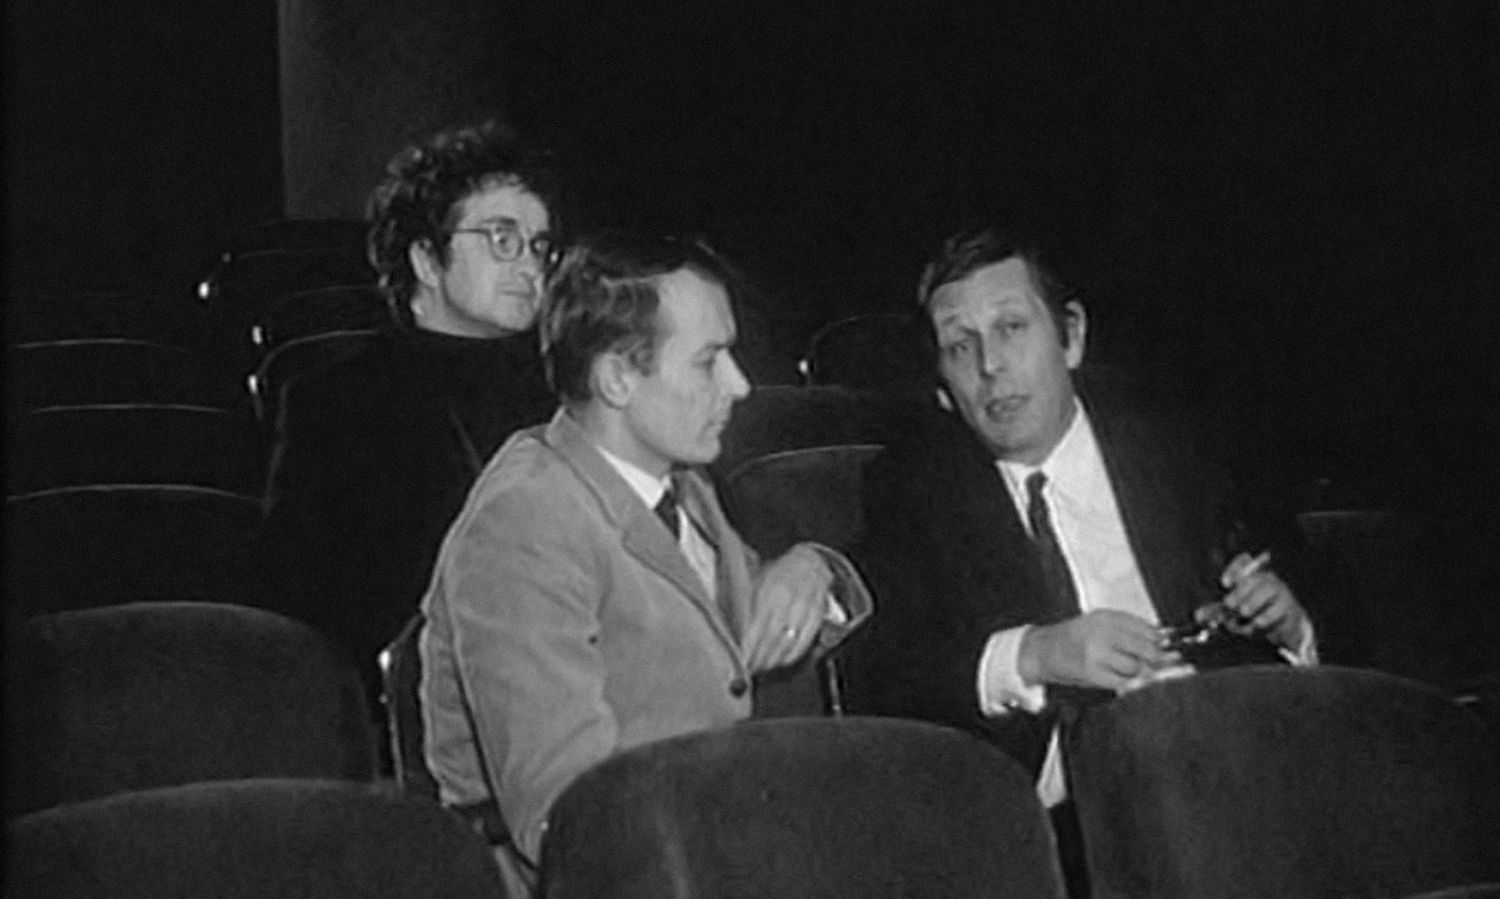 1968 Diskussion im Kino